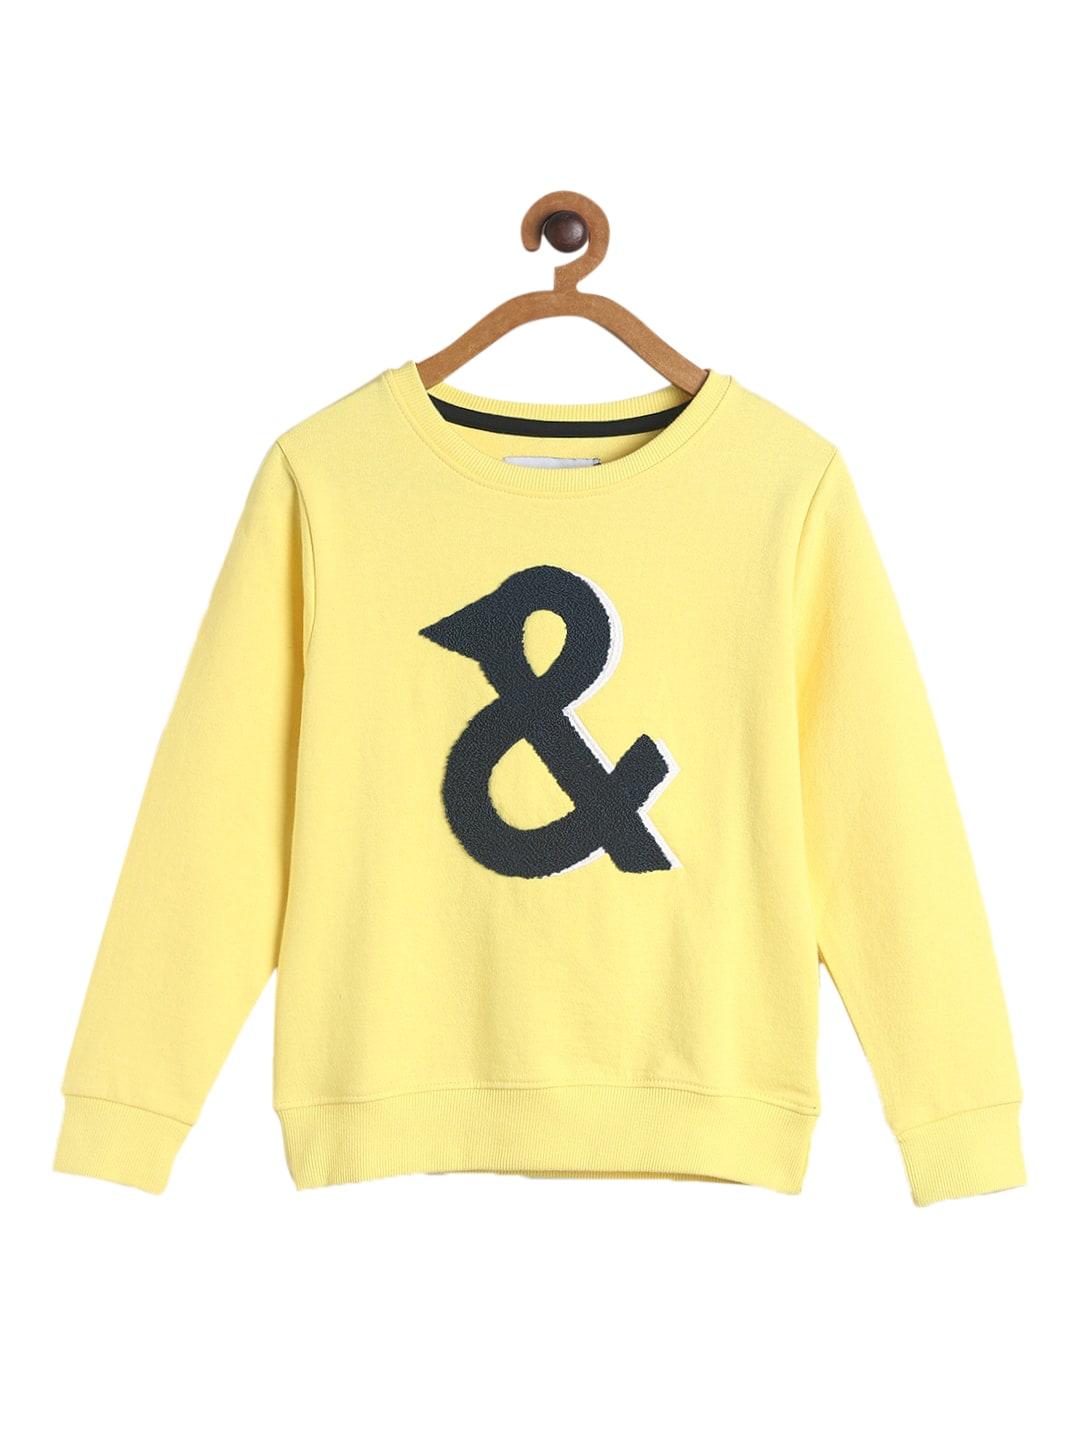 TALES & STORIES Boys Yellow Printed Sweatshirt